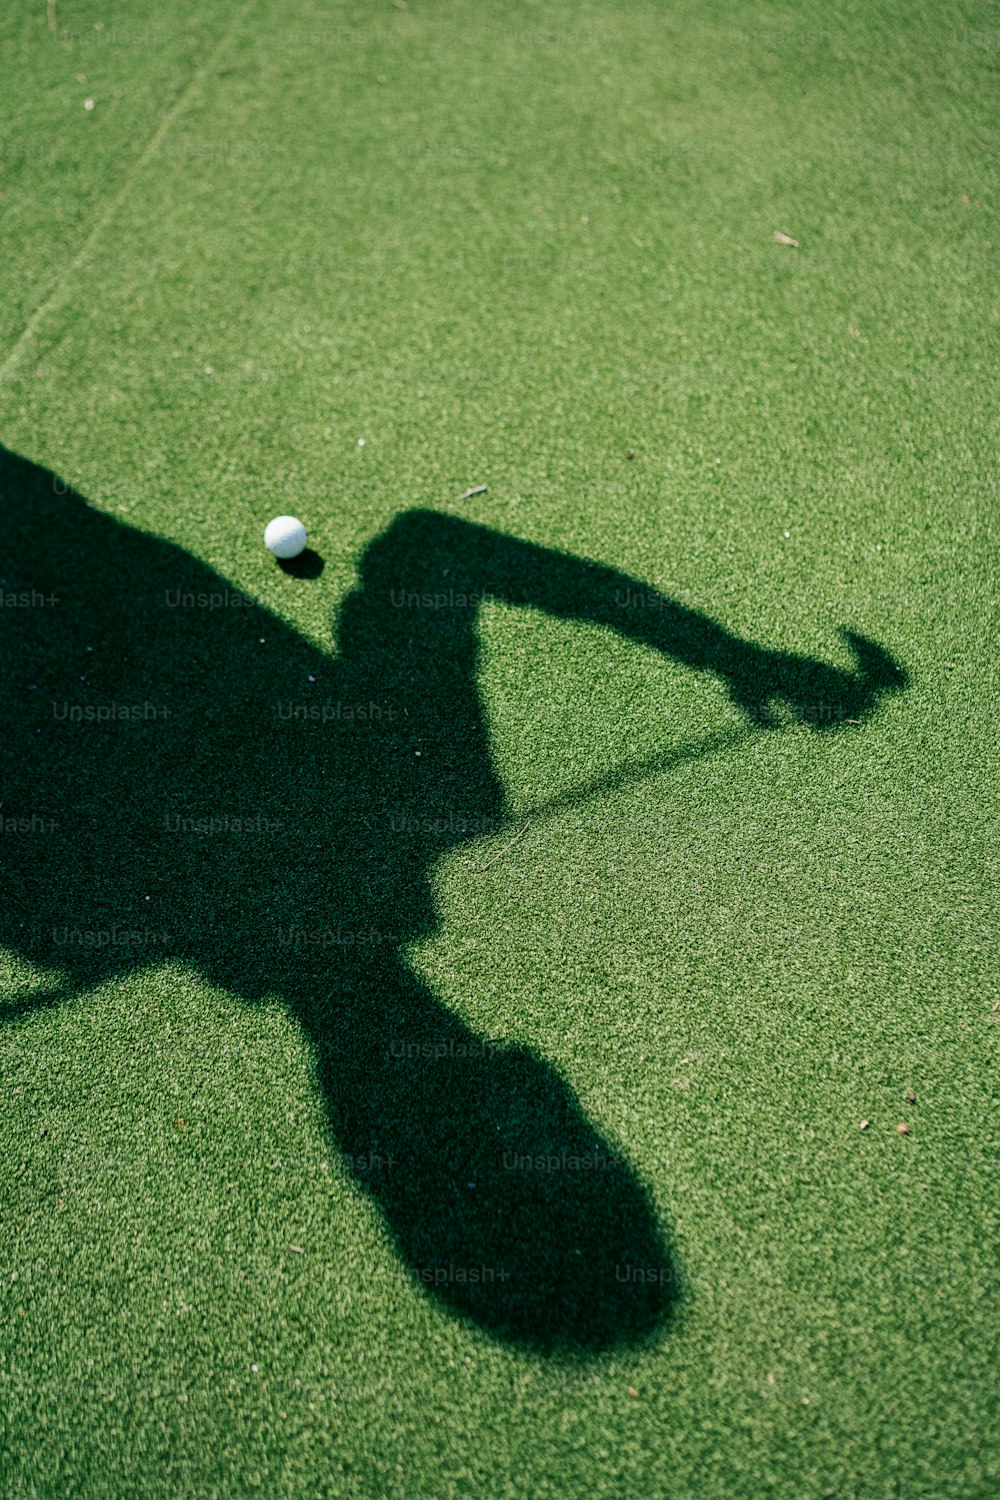 a shadow of a person hitting a tennis ball